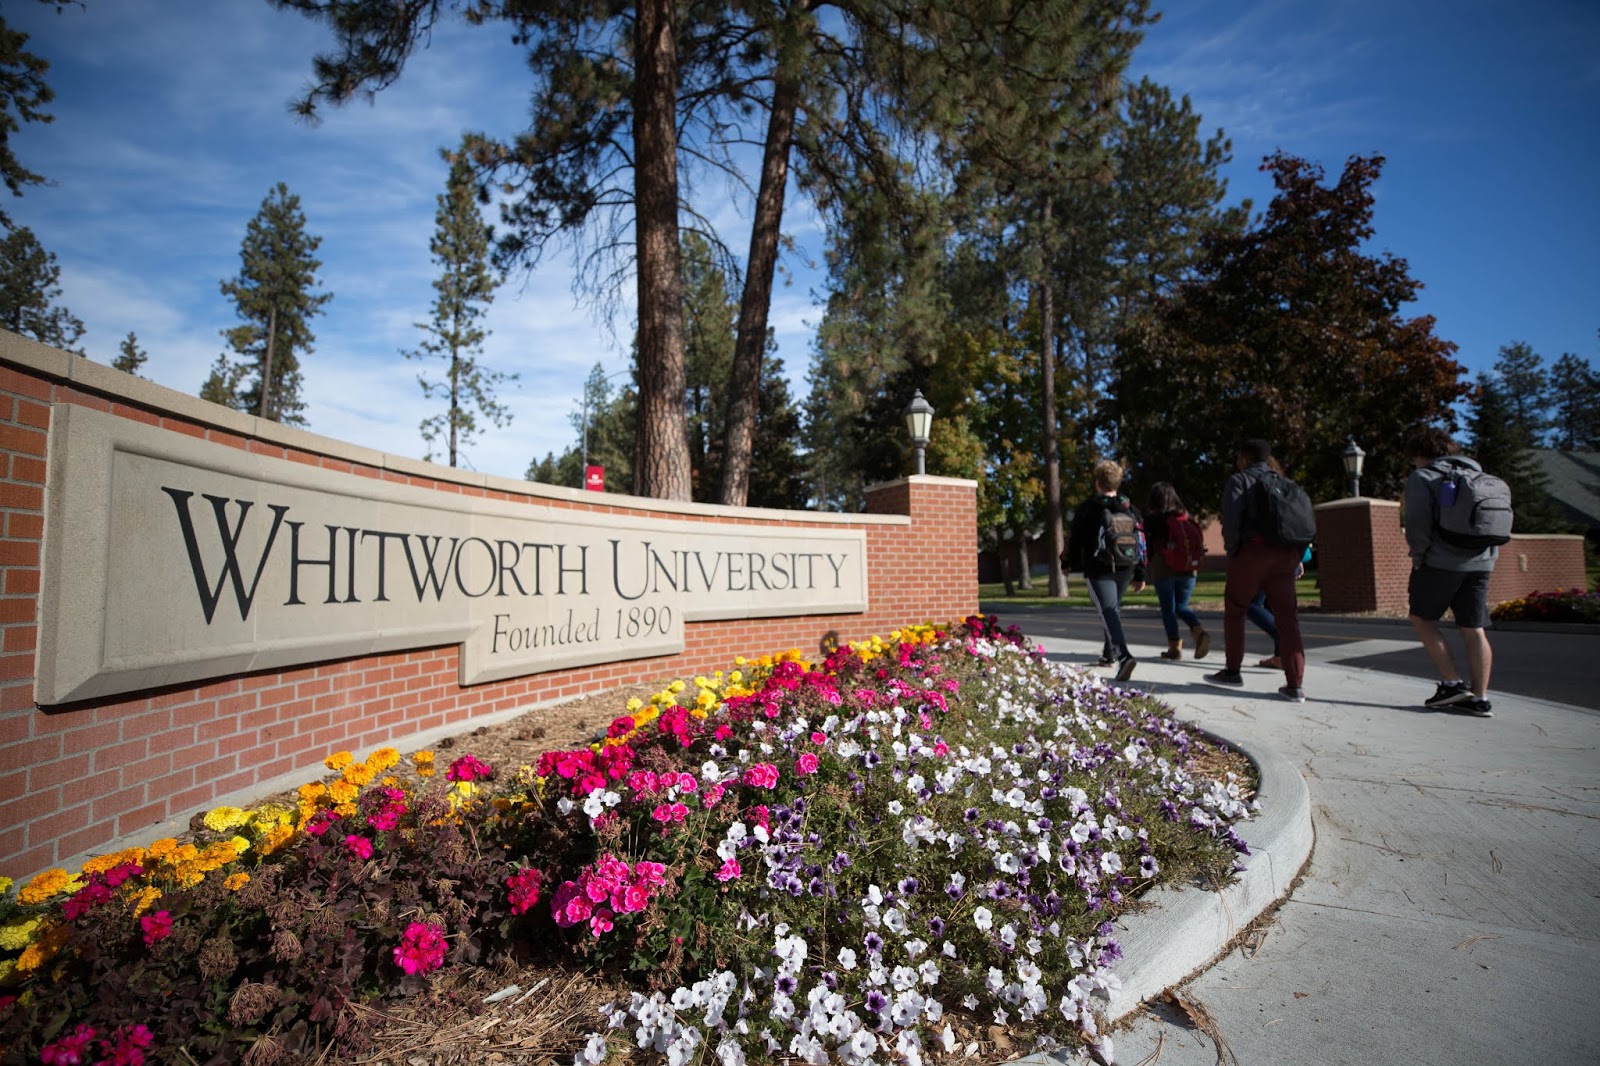 Whitworth University business degrees